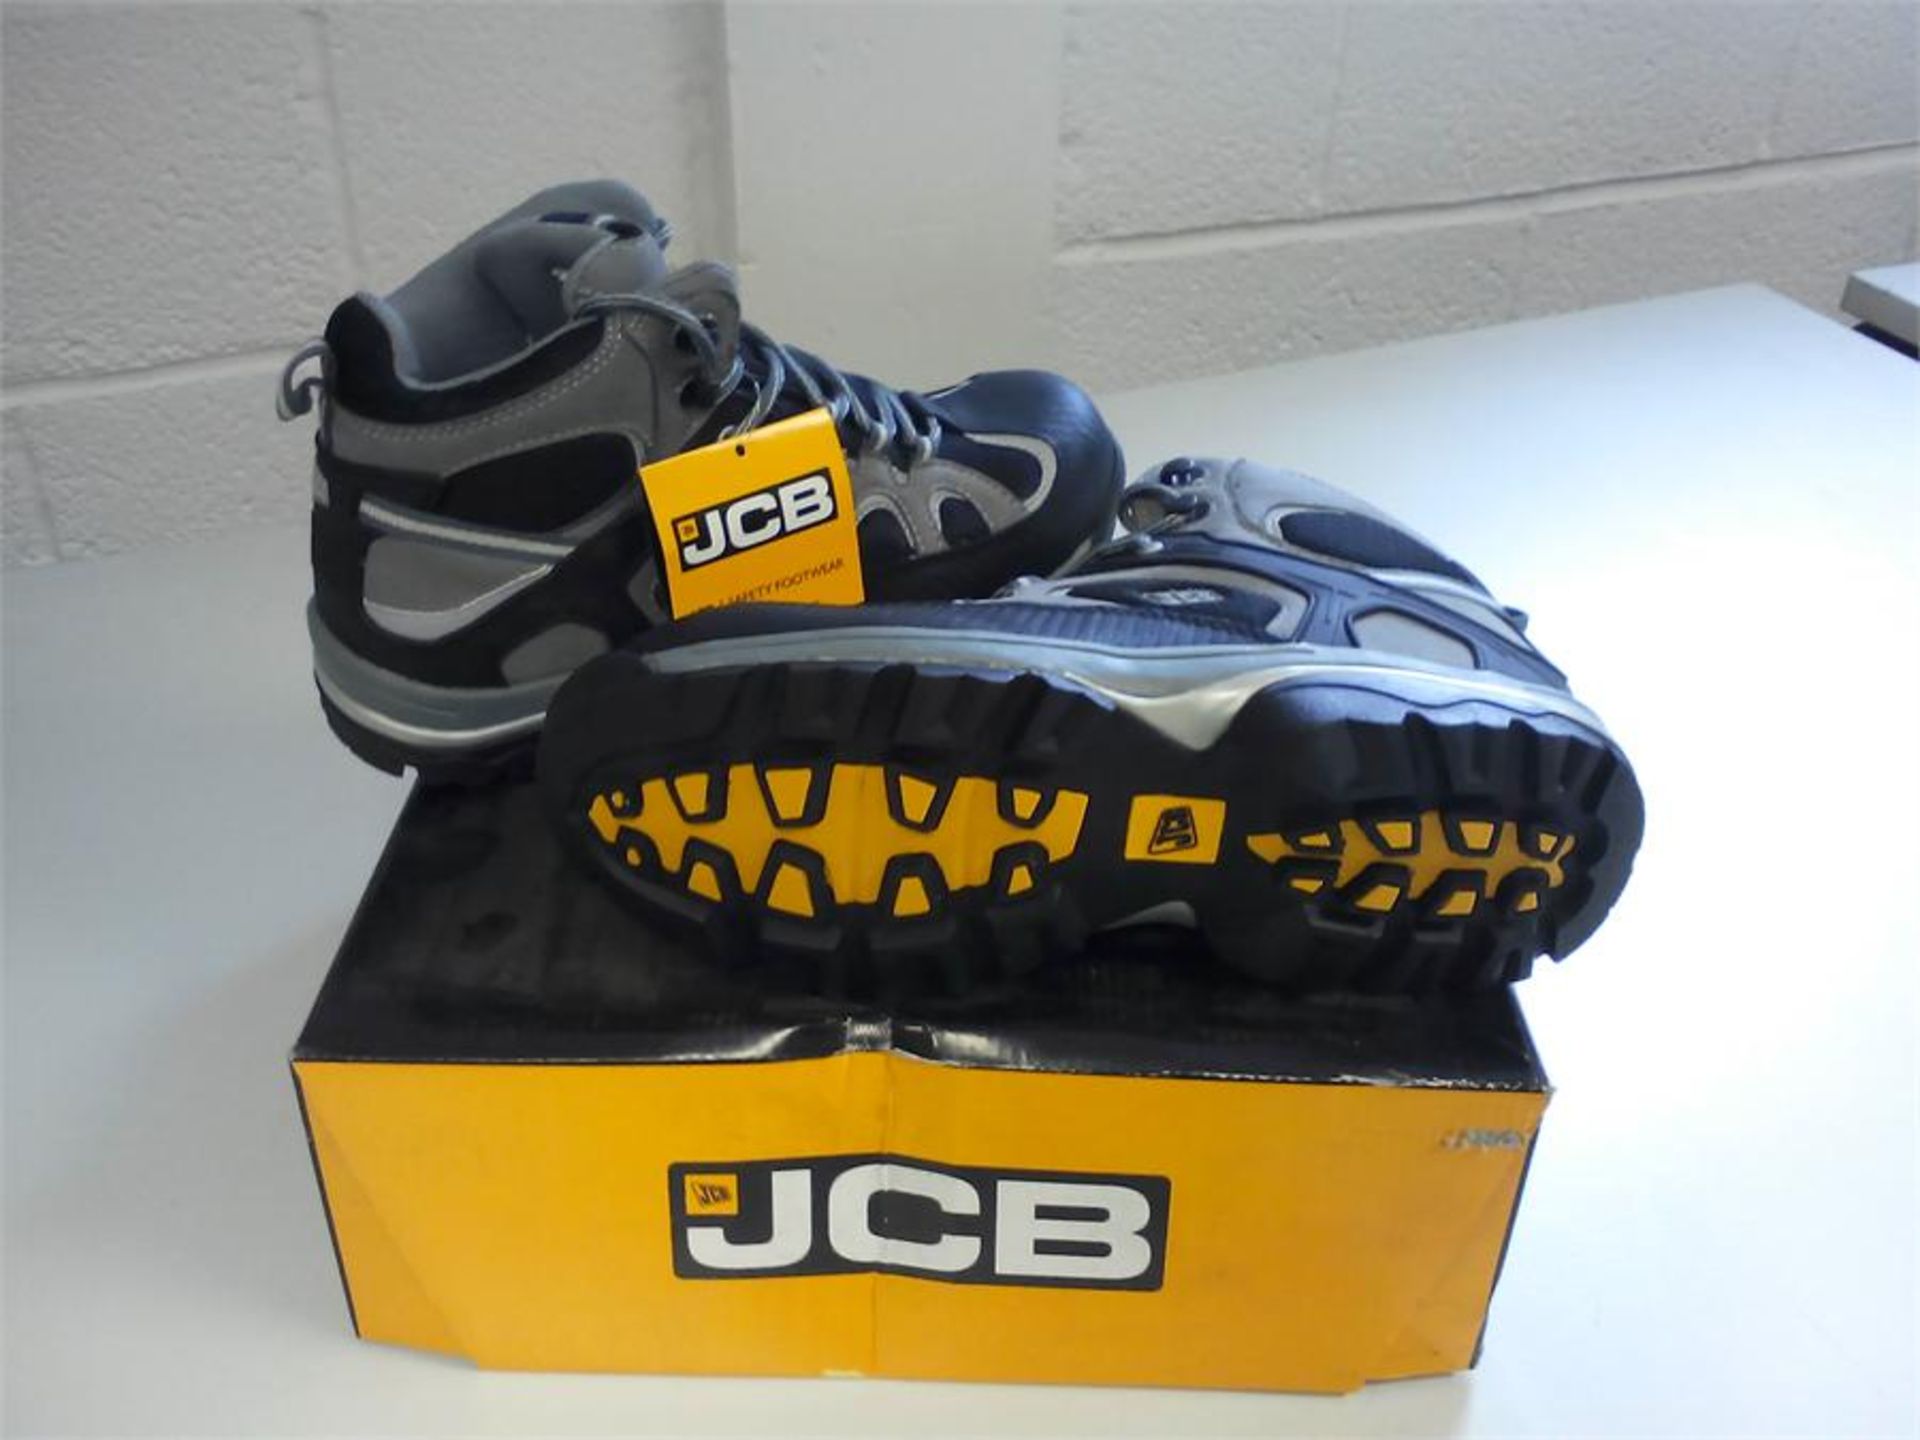 JCB Safety Boots NEW Boxed - RRP £40 - UK Size 10 / USA 11 / EURO 44 - Grey/Black Microfiber/Mesh